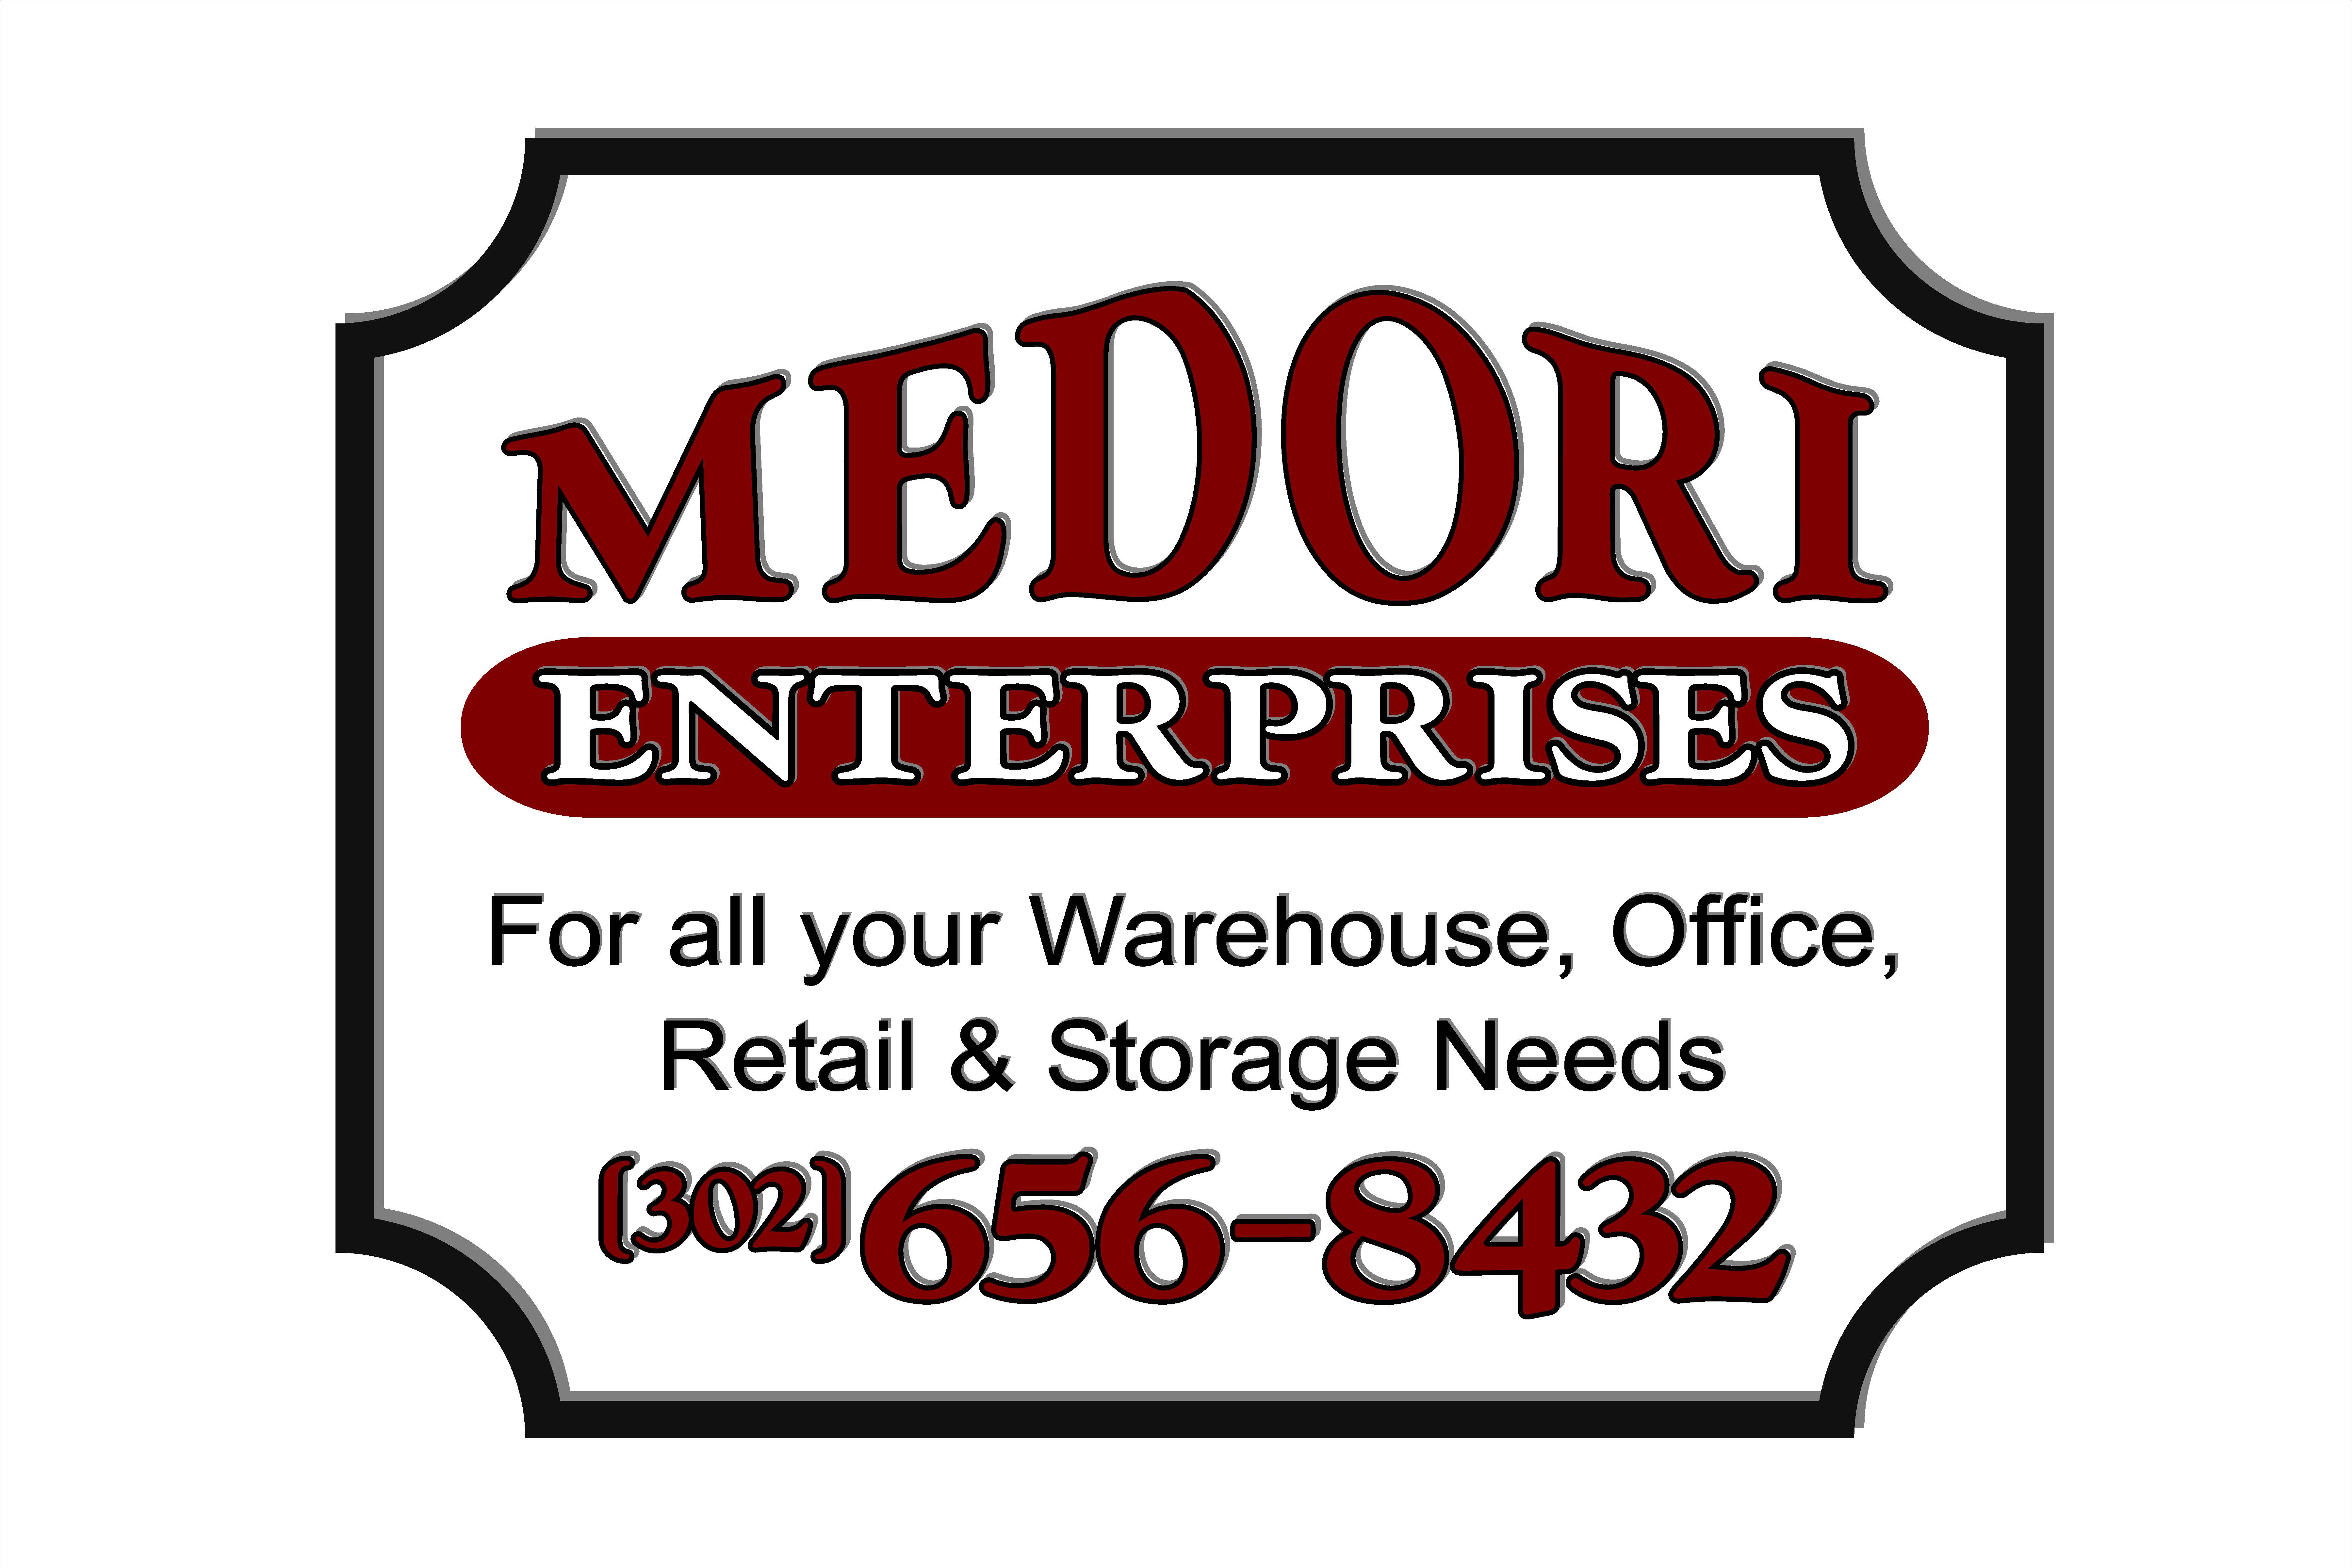 Medori Enterprises